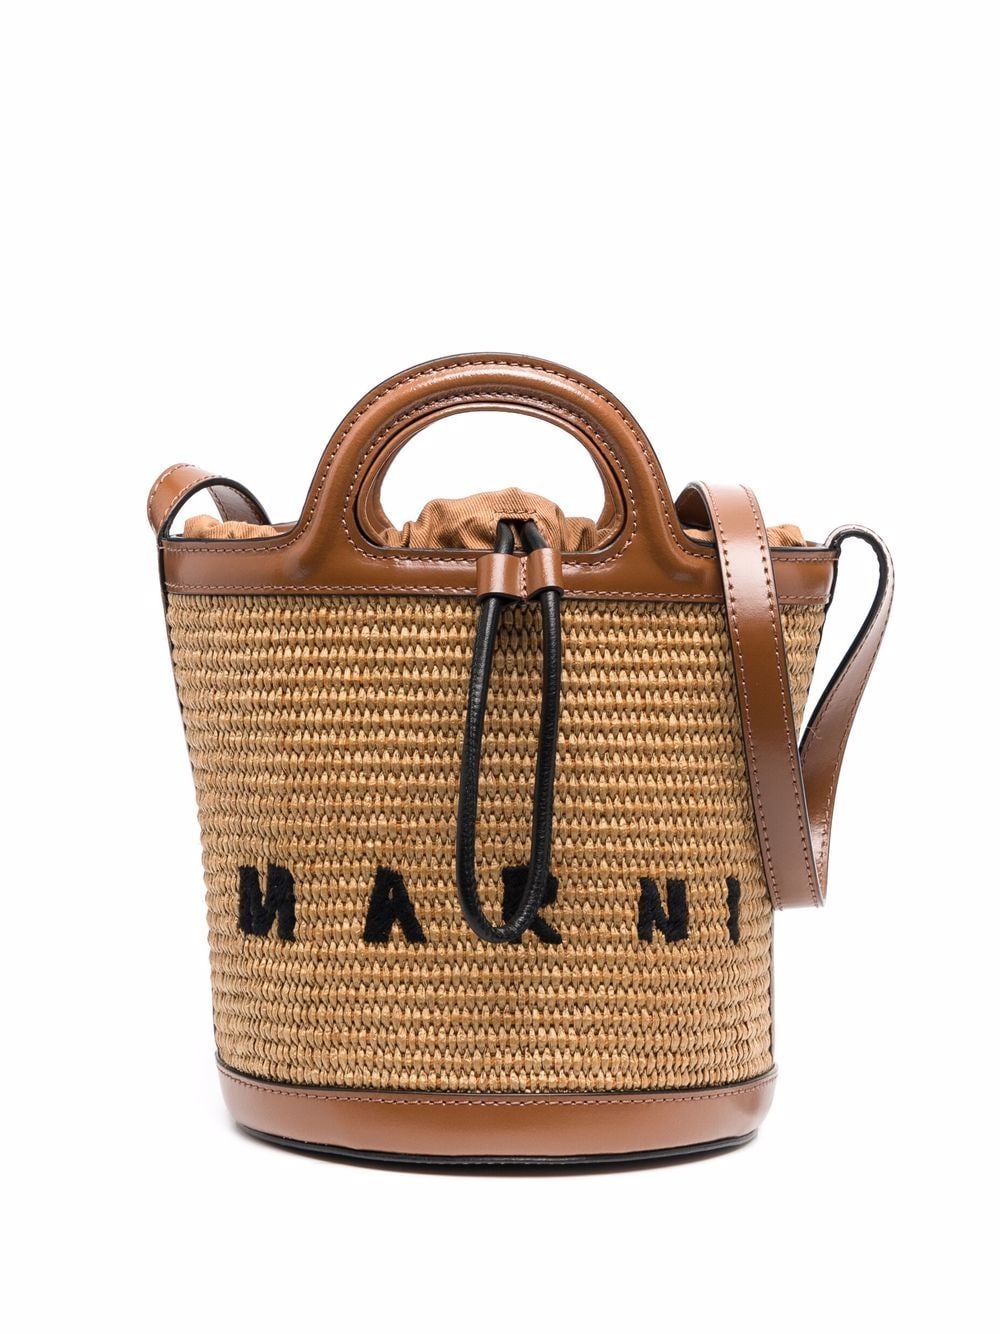 MARNI Women's Tropicalia Mini Bucket Bag in Brown Leather - Shoulder Style